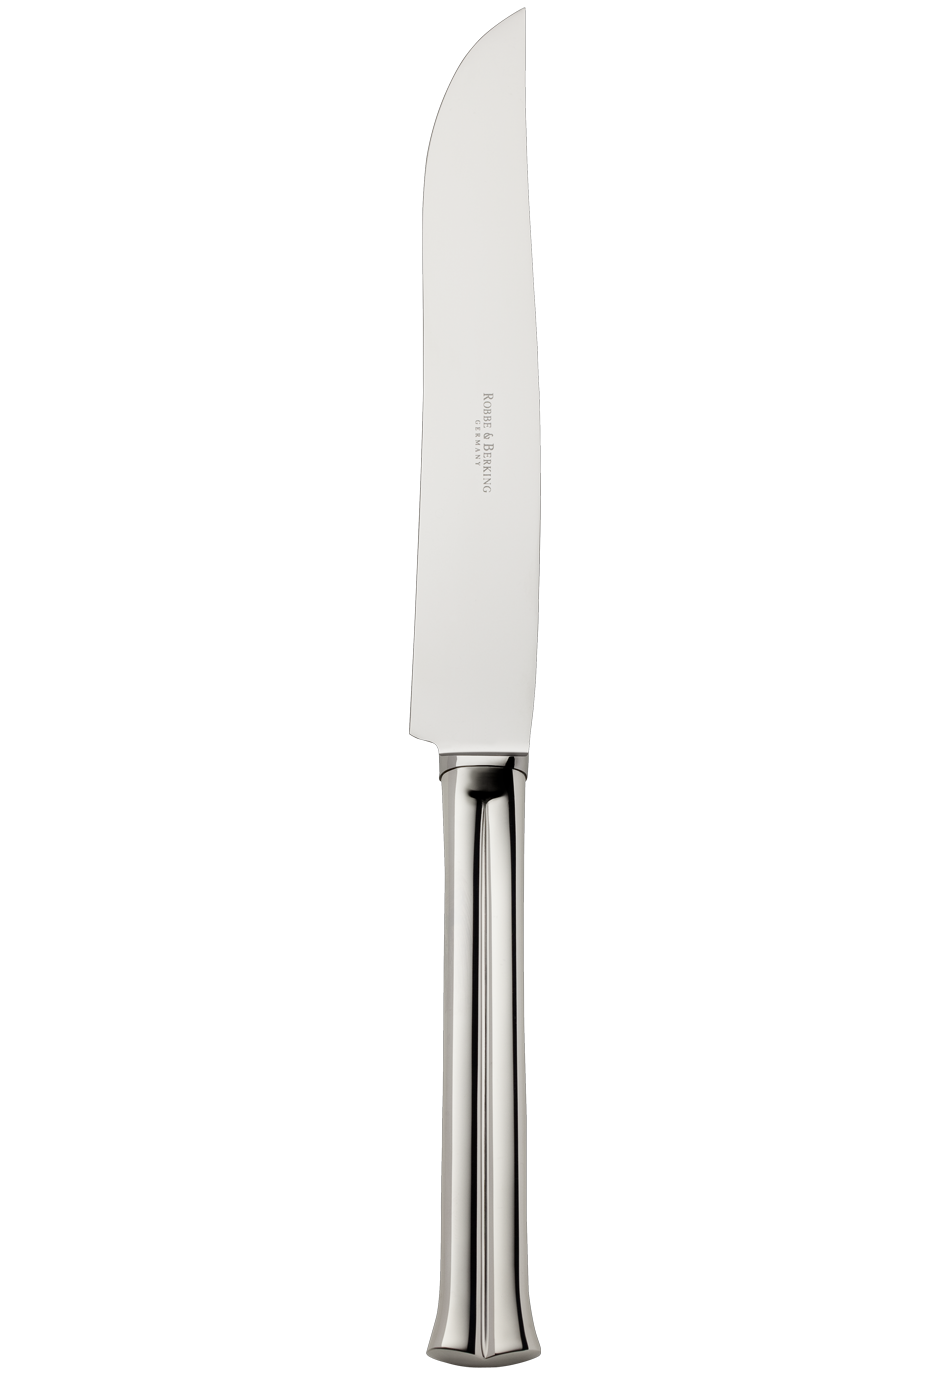 Viva Carving Knife (150g massive silverplated)